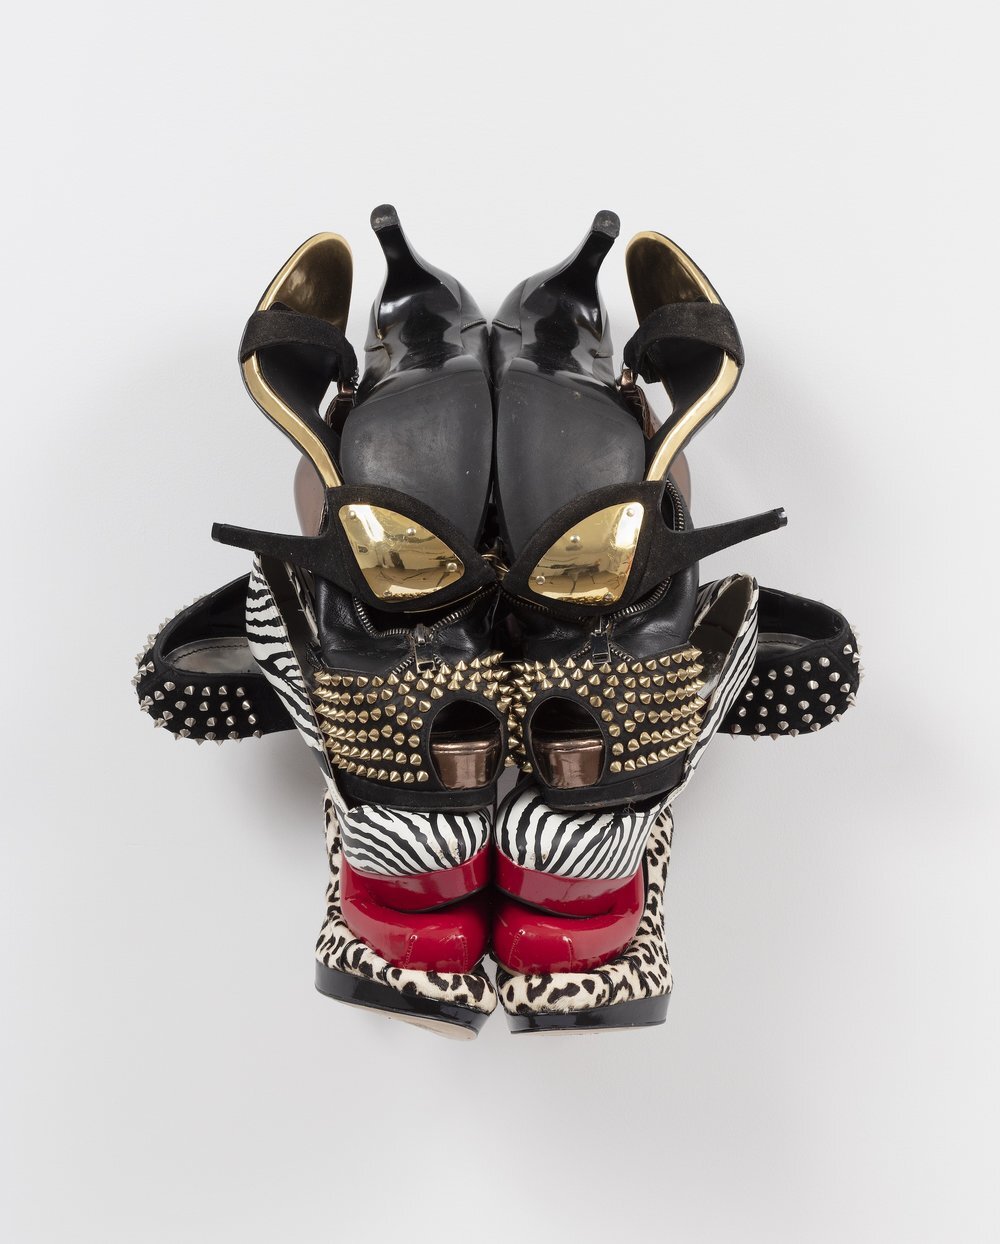 Willie Cole Shoe mask.jpg